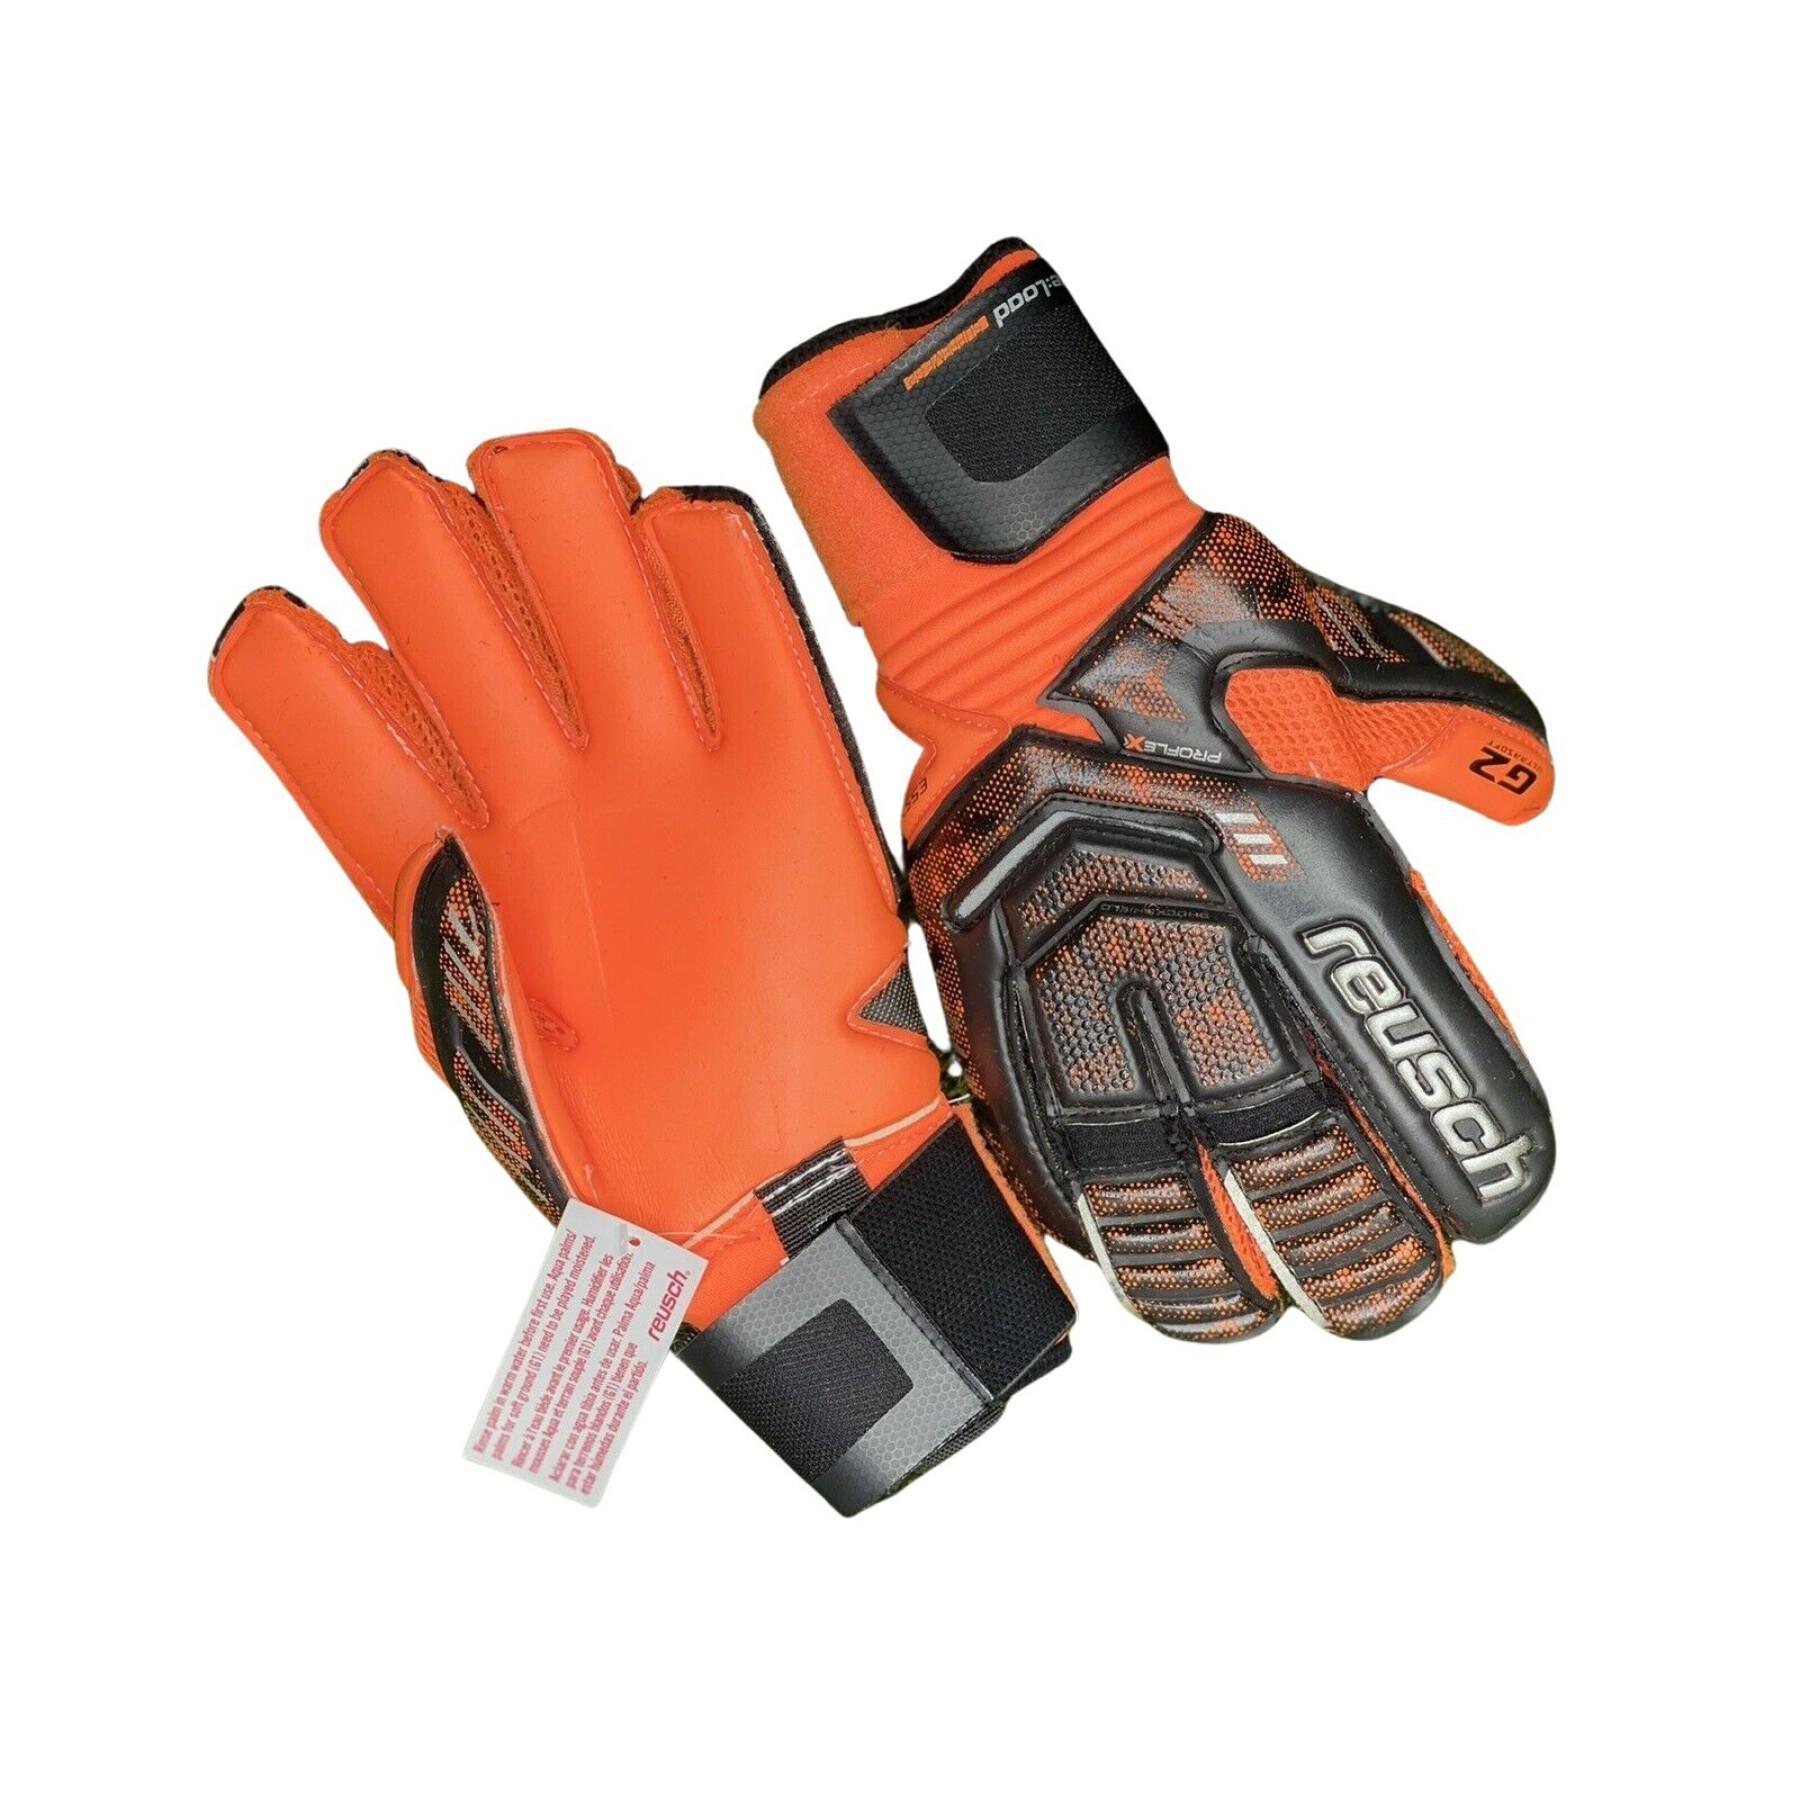 Goalkeeper gloves Reusch Re:load Supreme G2